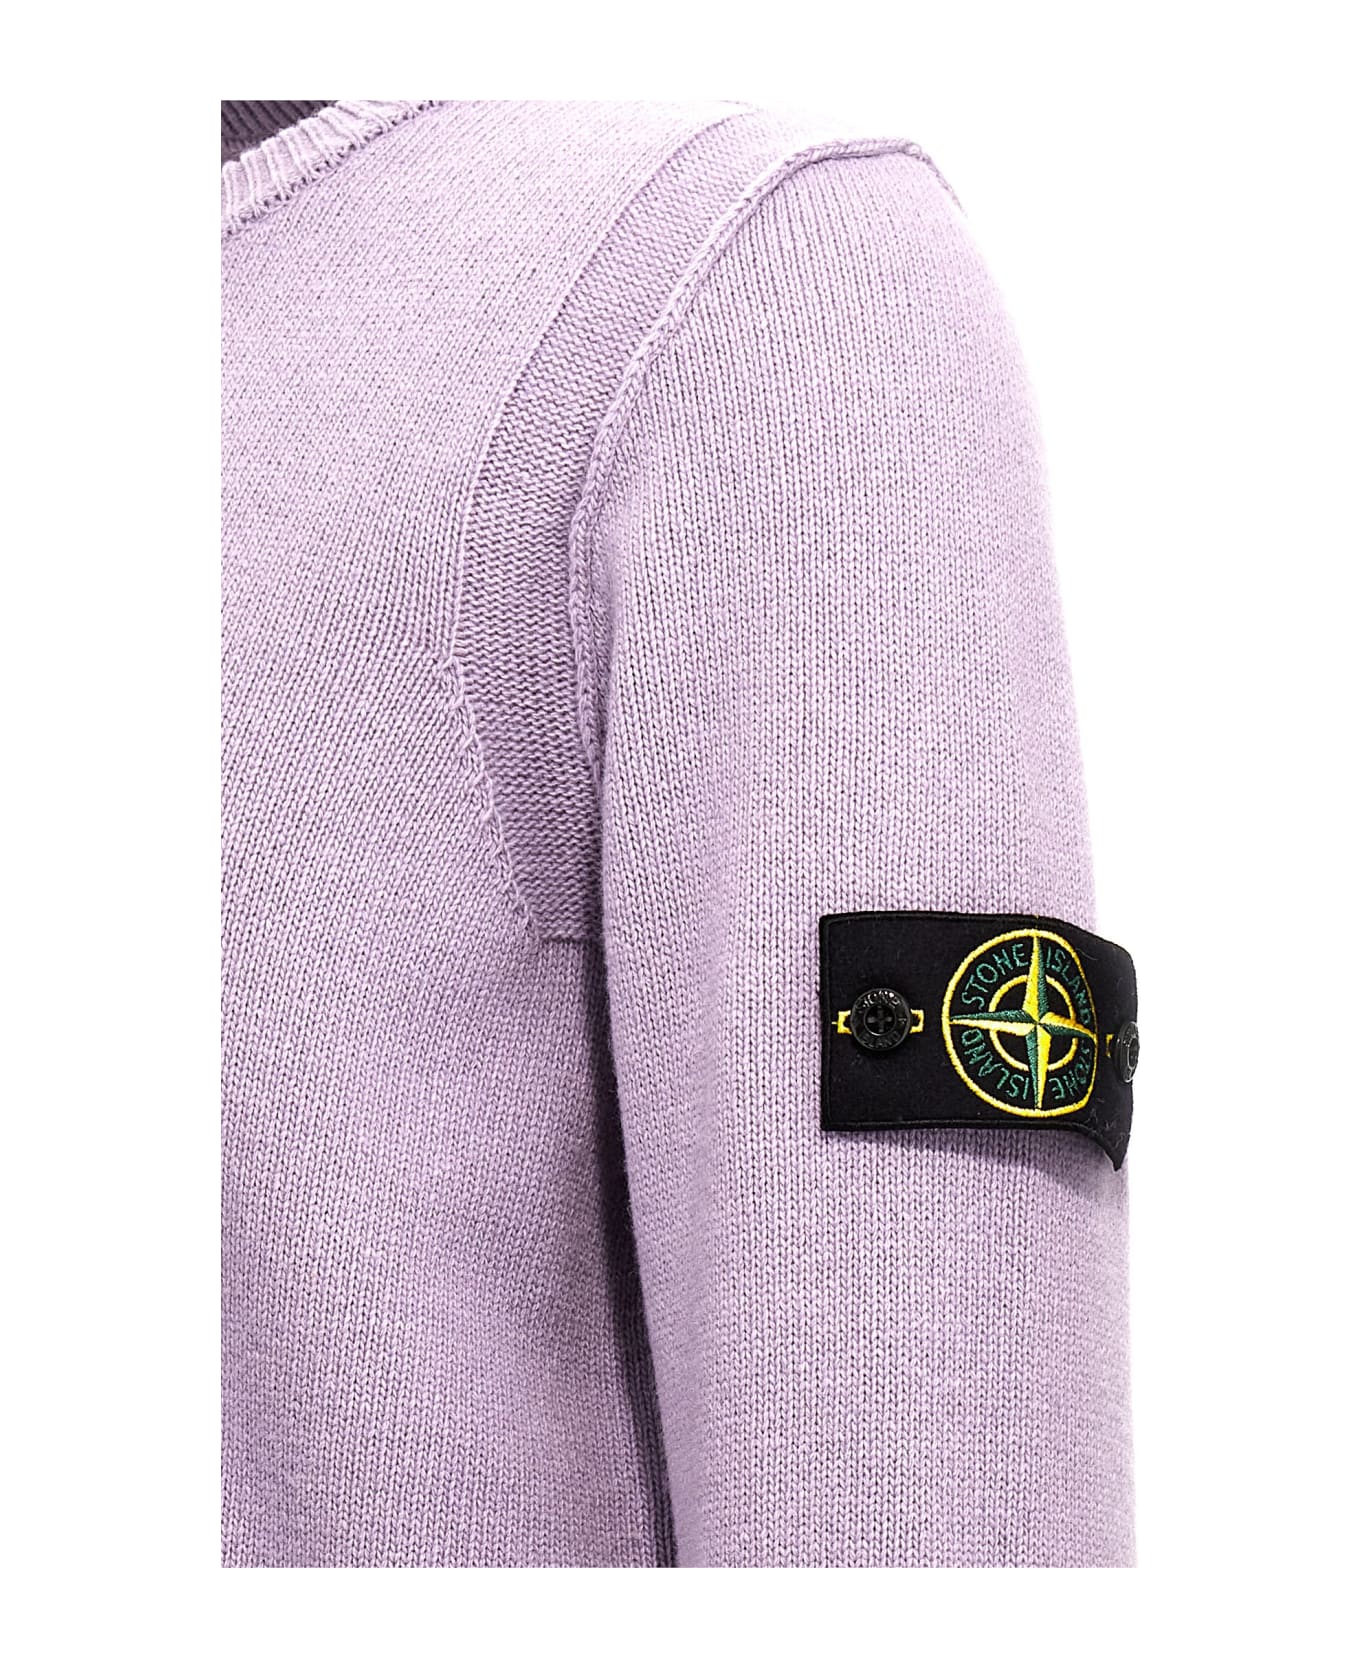 Stone Island Logo Badge Sweater - Purple